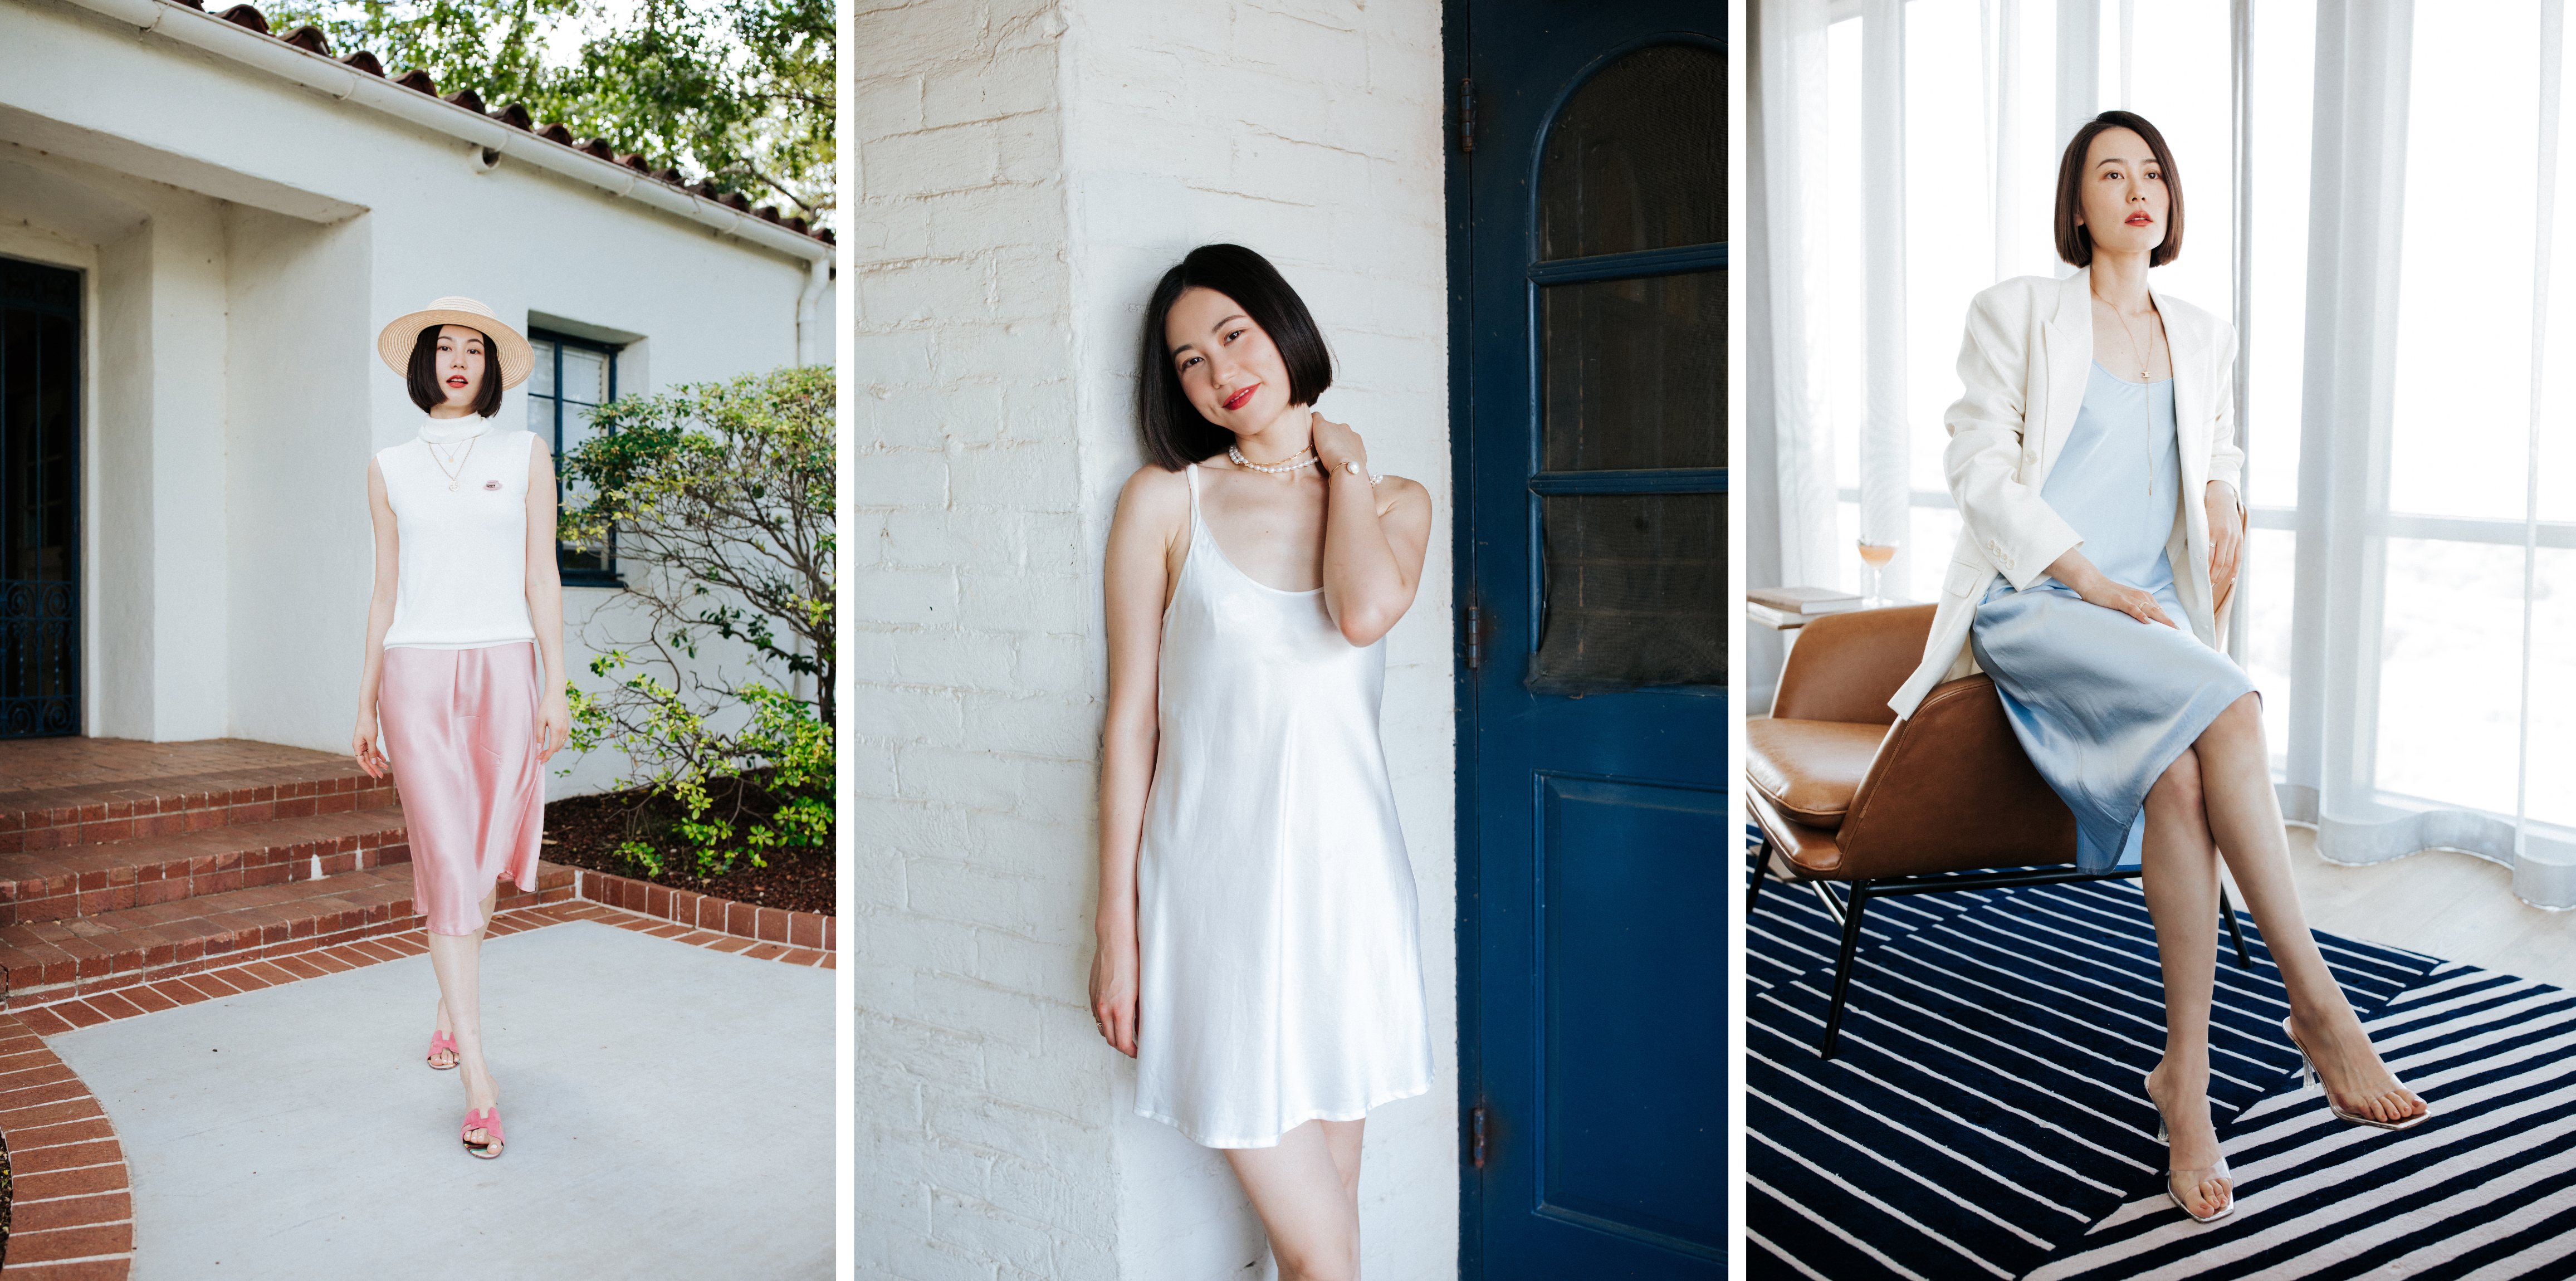  5 Must-Have Summer Dresses | Mini, Midi, Maxi & More 